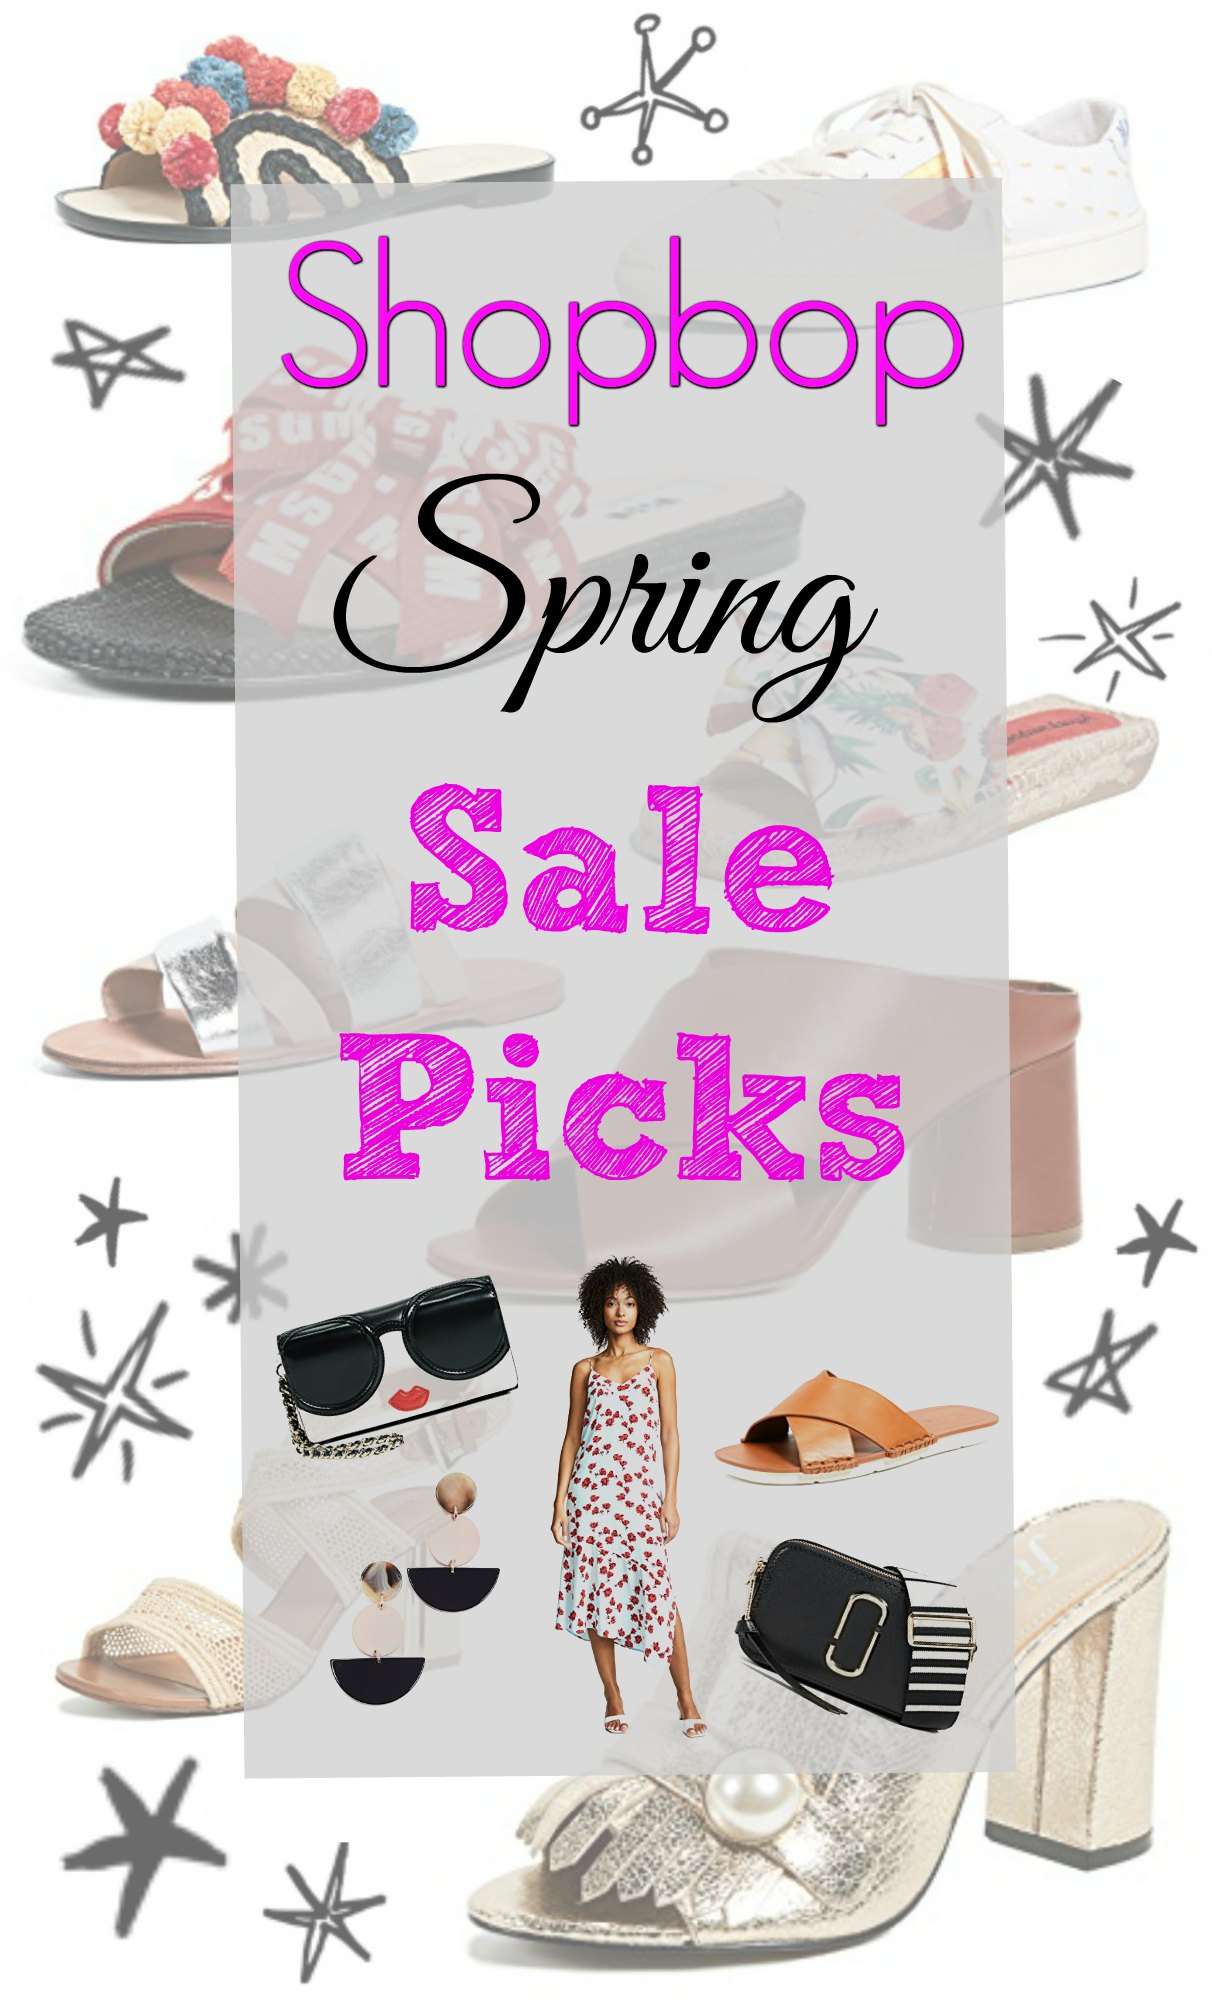 Shopbop Spring Sale Picks